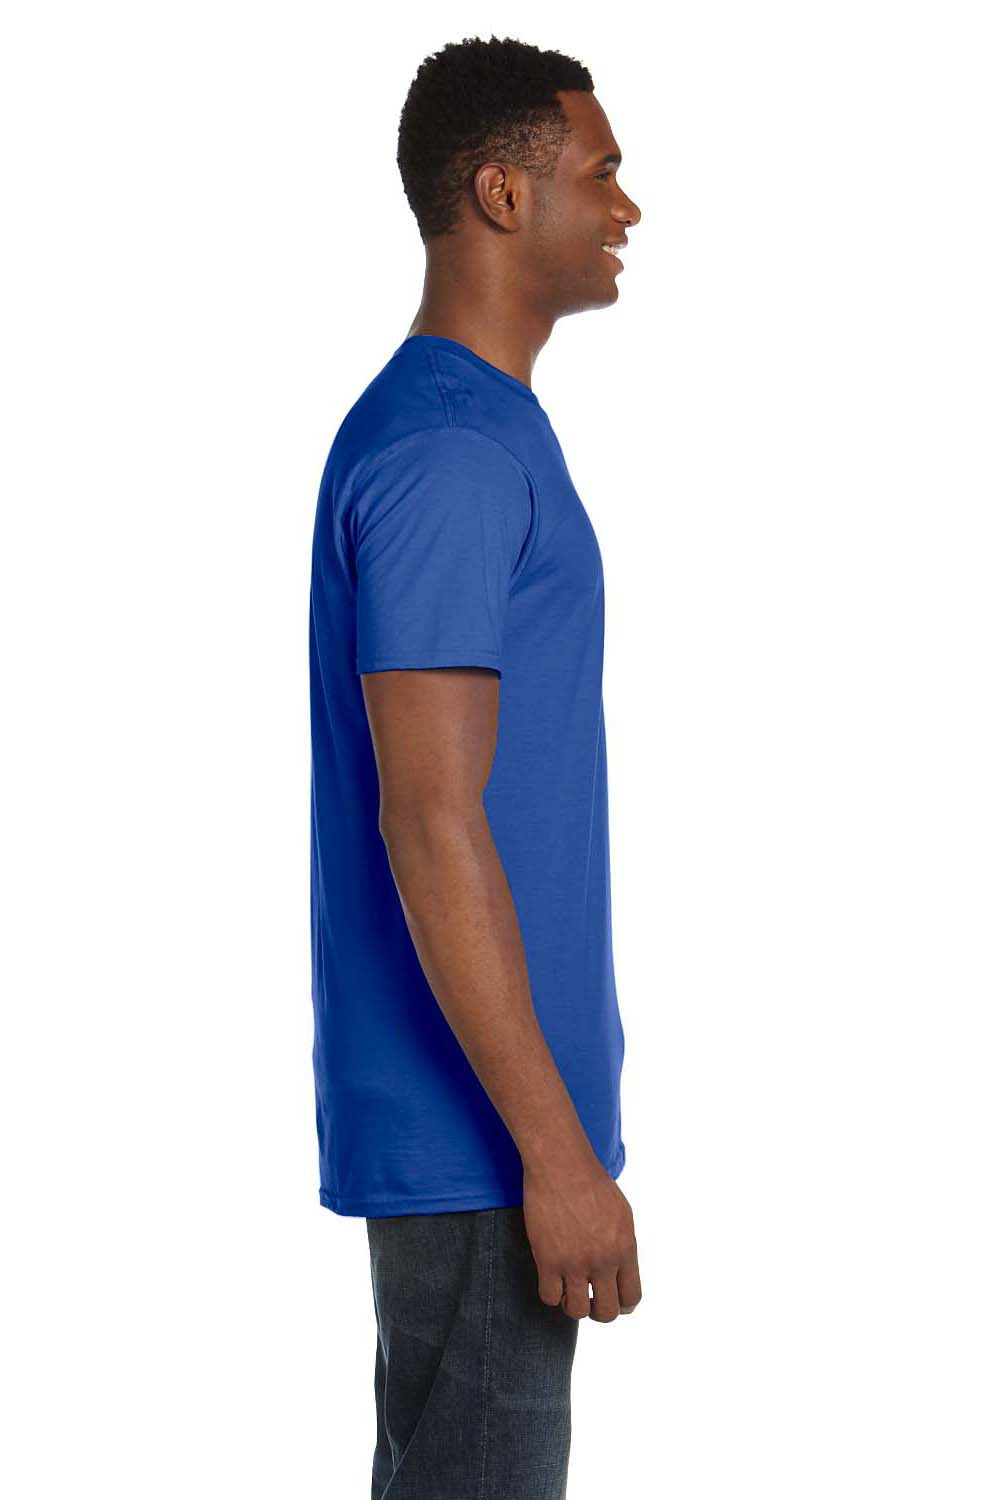 Hanes 4980 Mens Nano-T Short Sleeve Crewneck T-Shirt Royal Blue Side